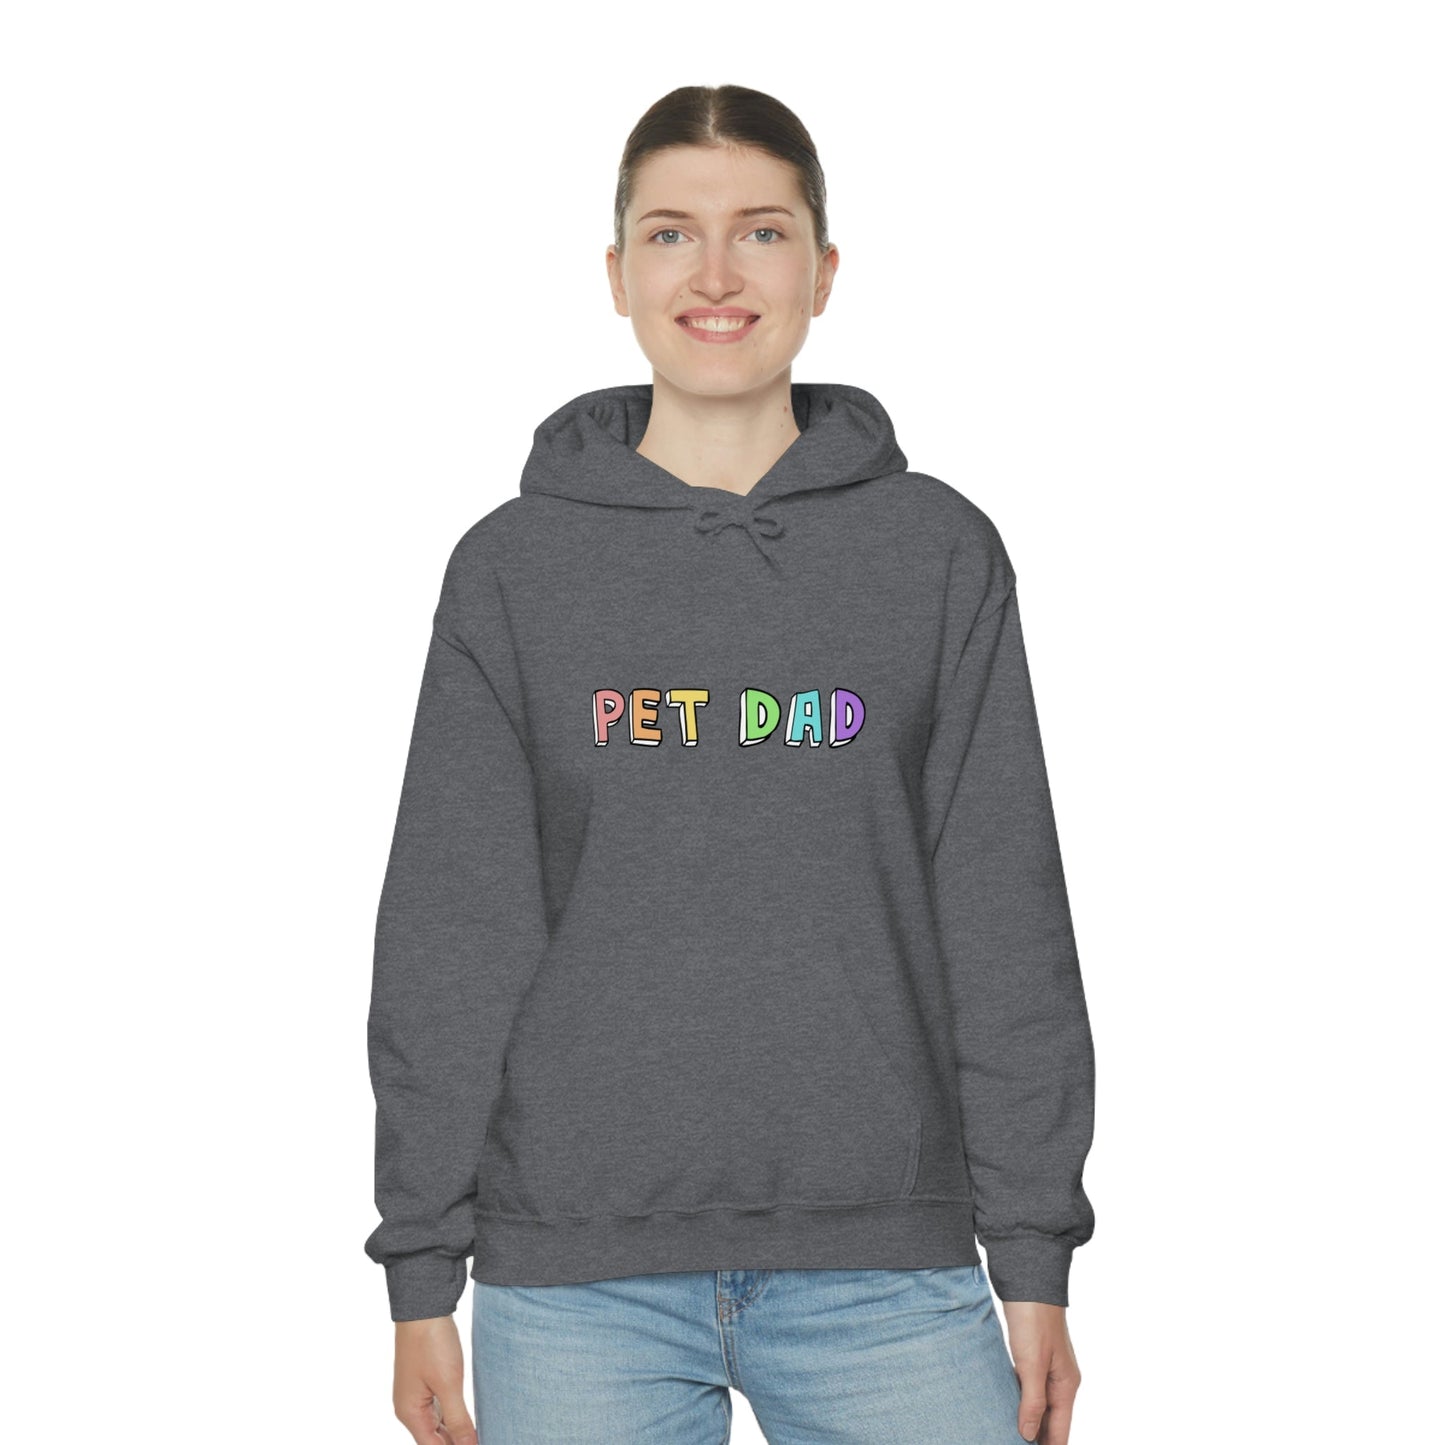 Pet Dad | Hooded Sweatshirt - Detezi Designs-74754374364935005090